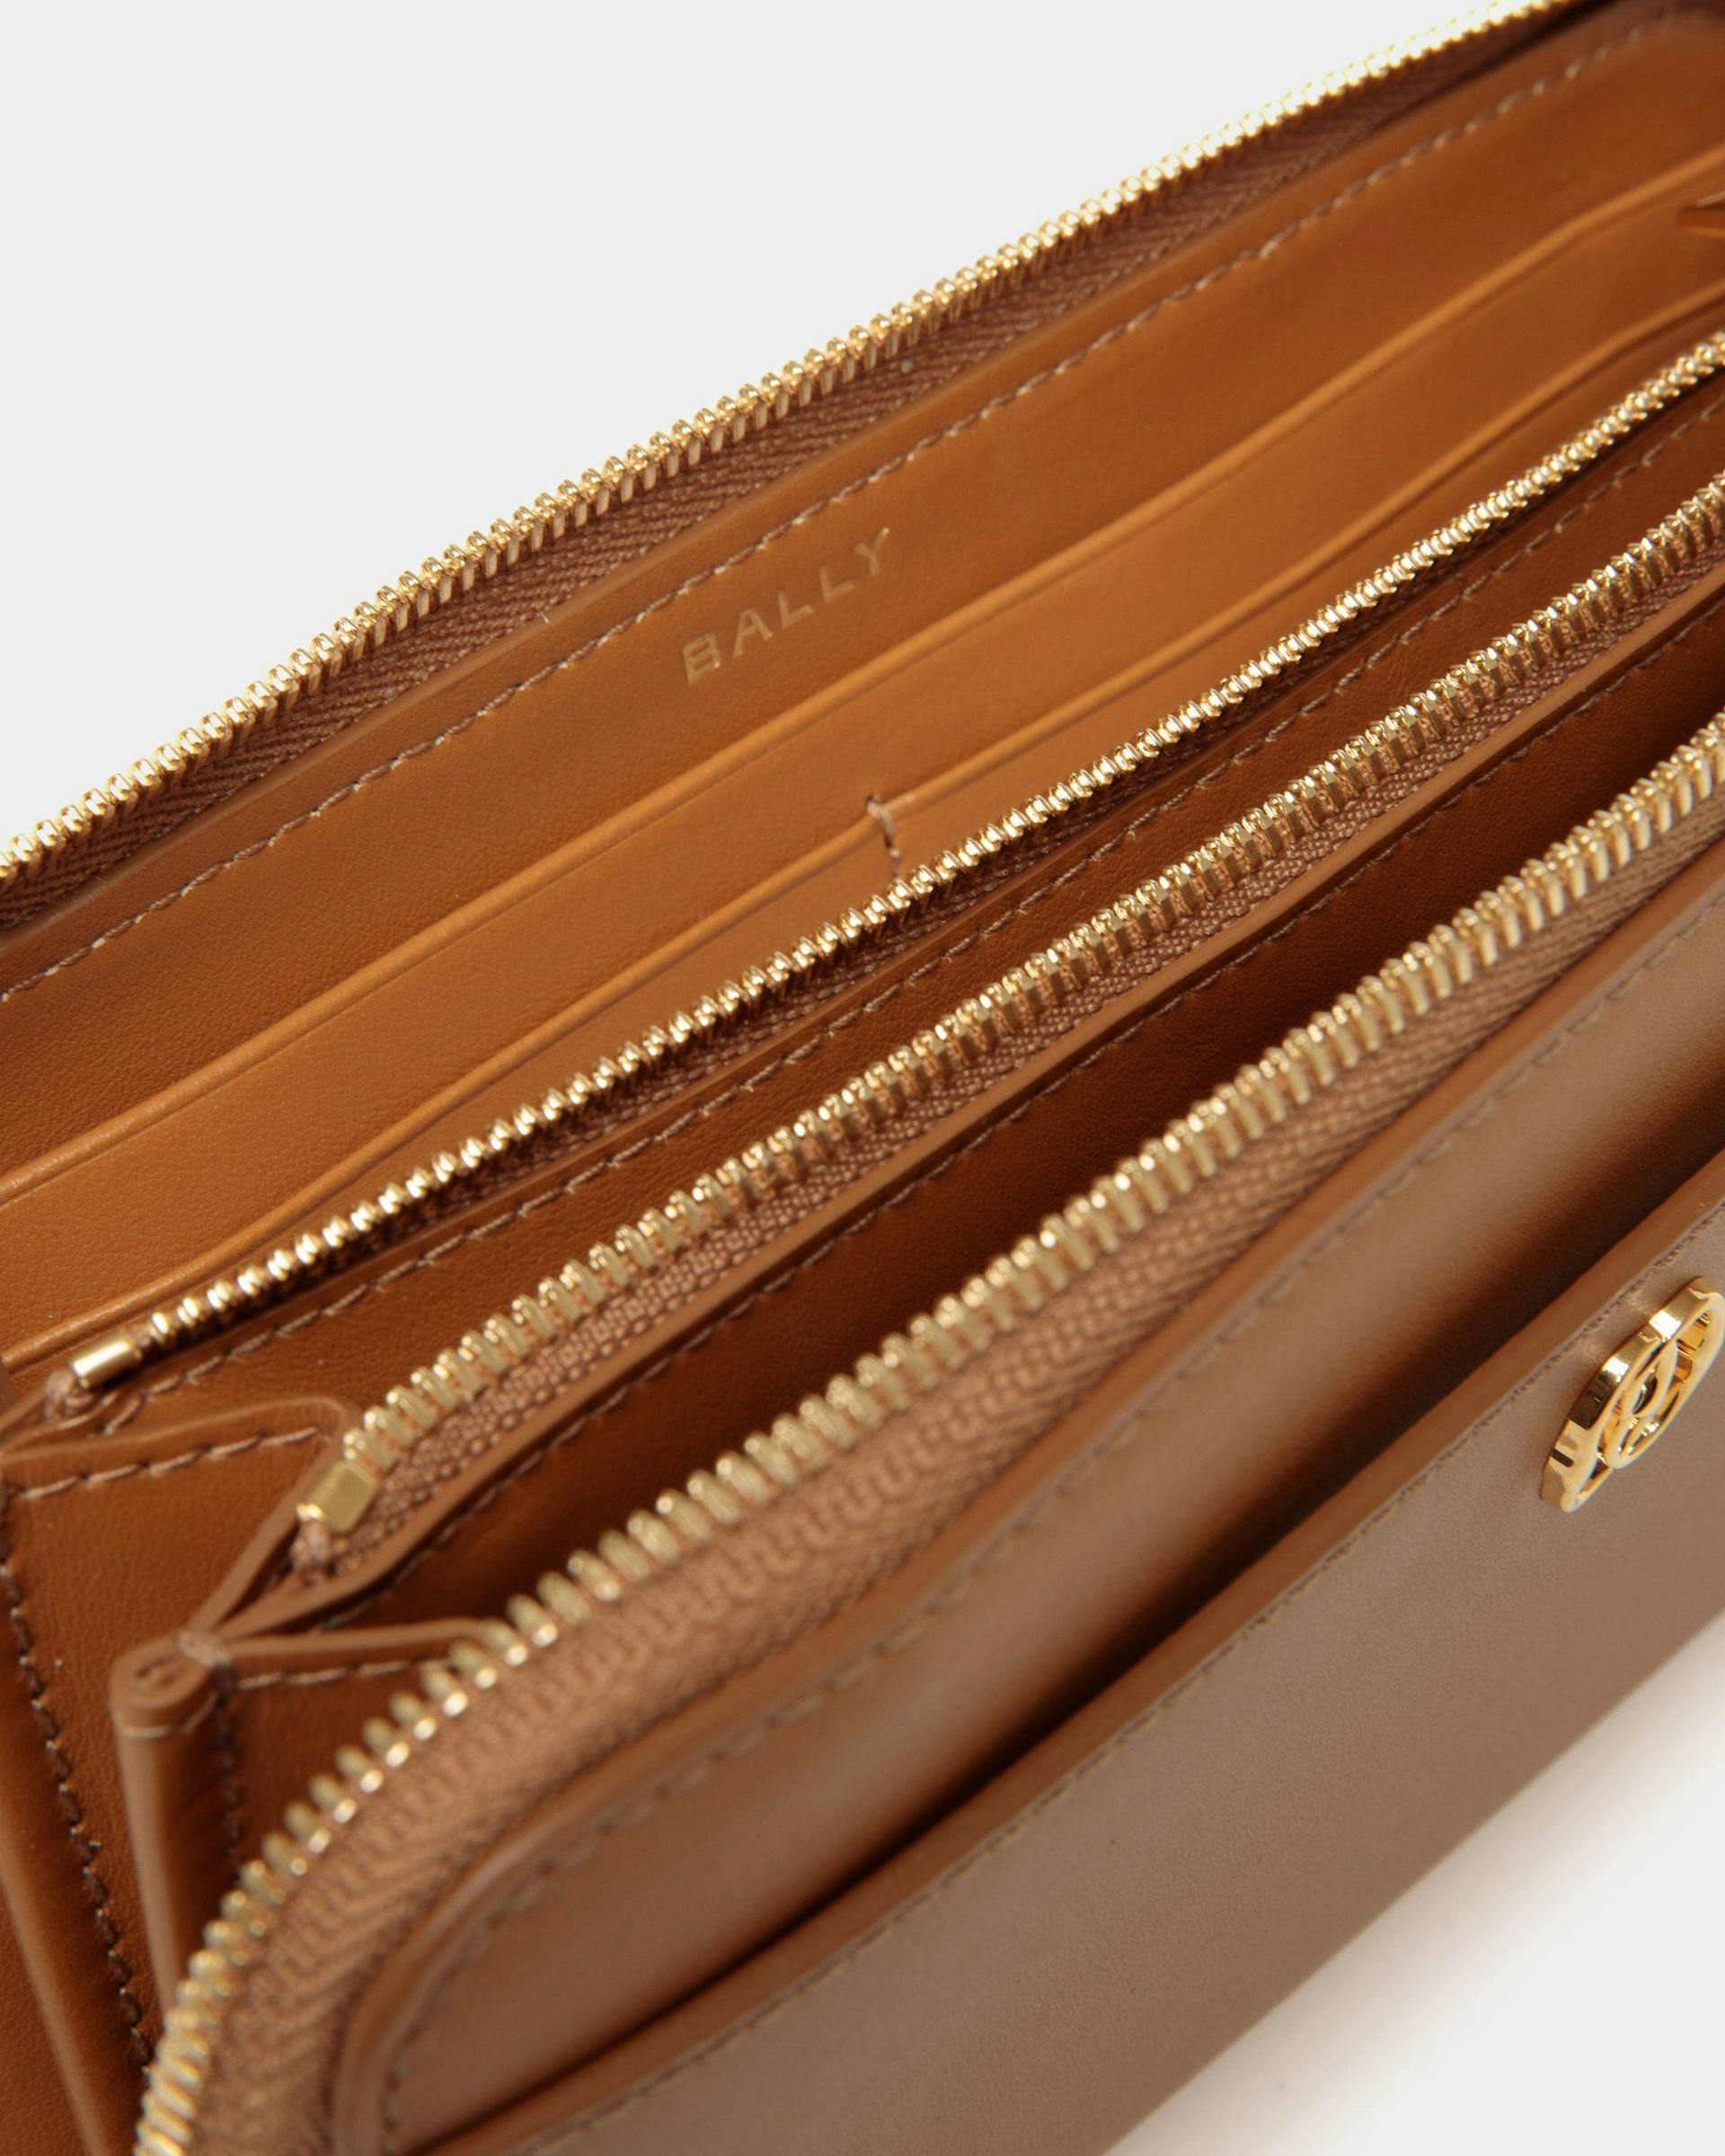 Women's Emblem Long Wallet In Brown Leather | Bally | Still Life Detail